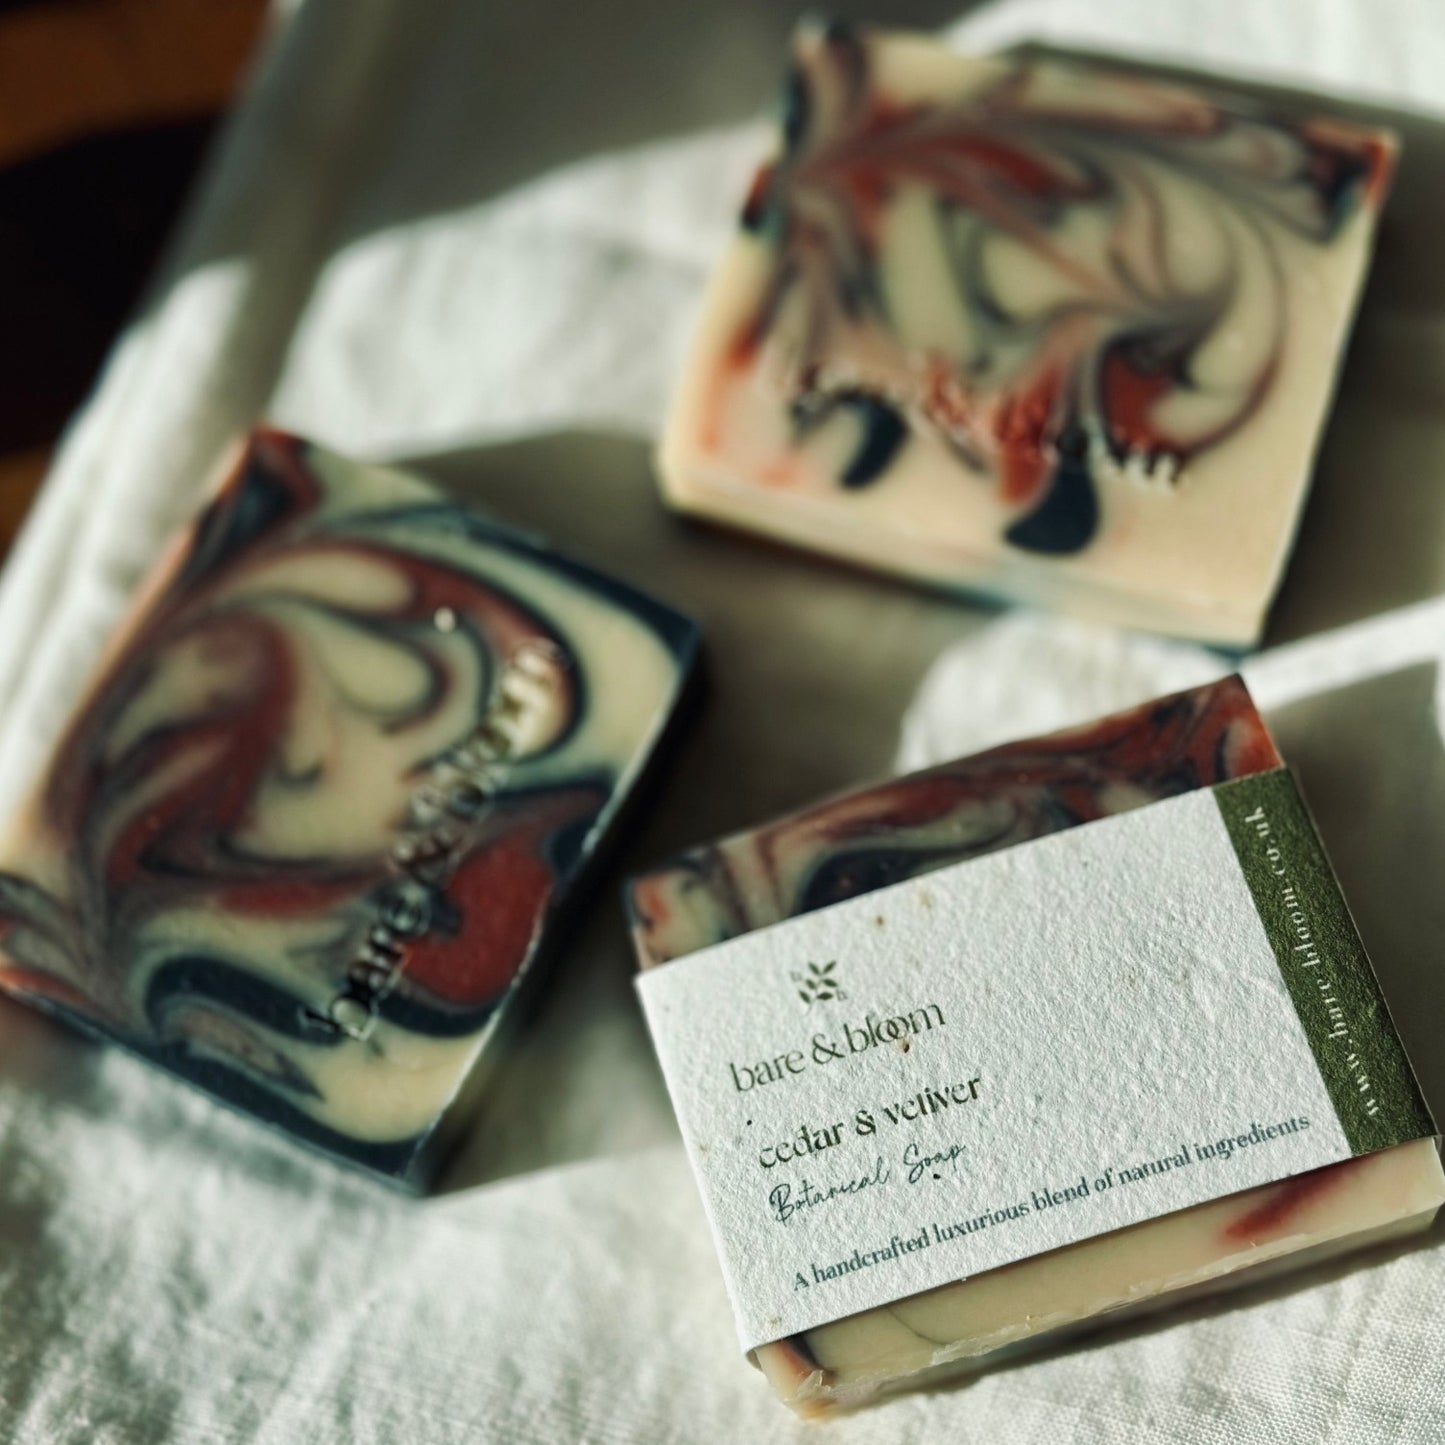 3 artisan soap bars